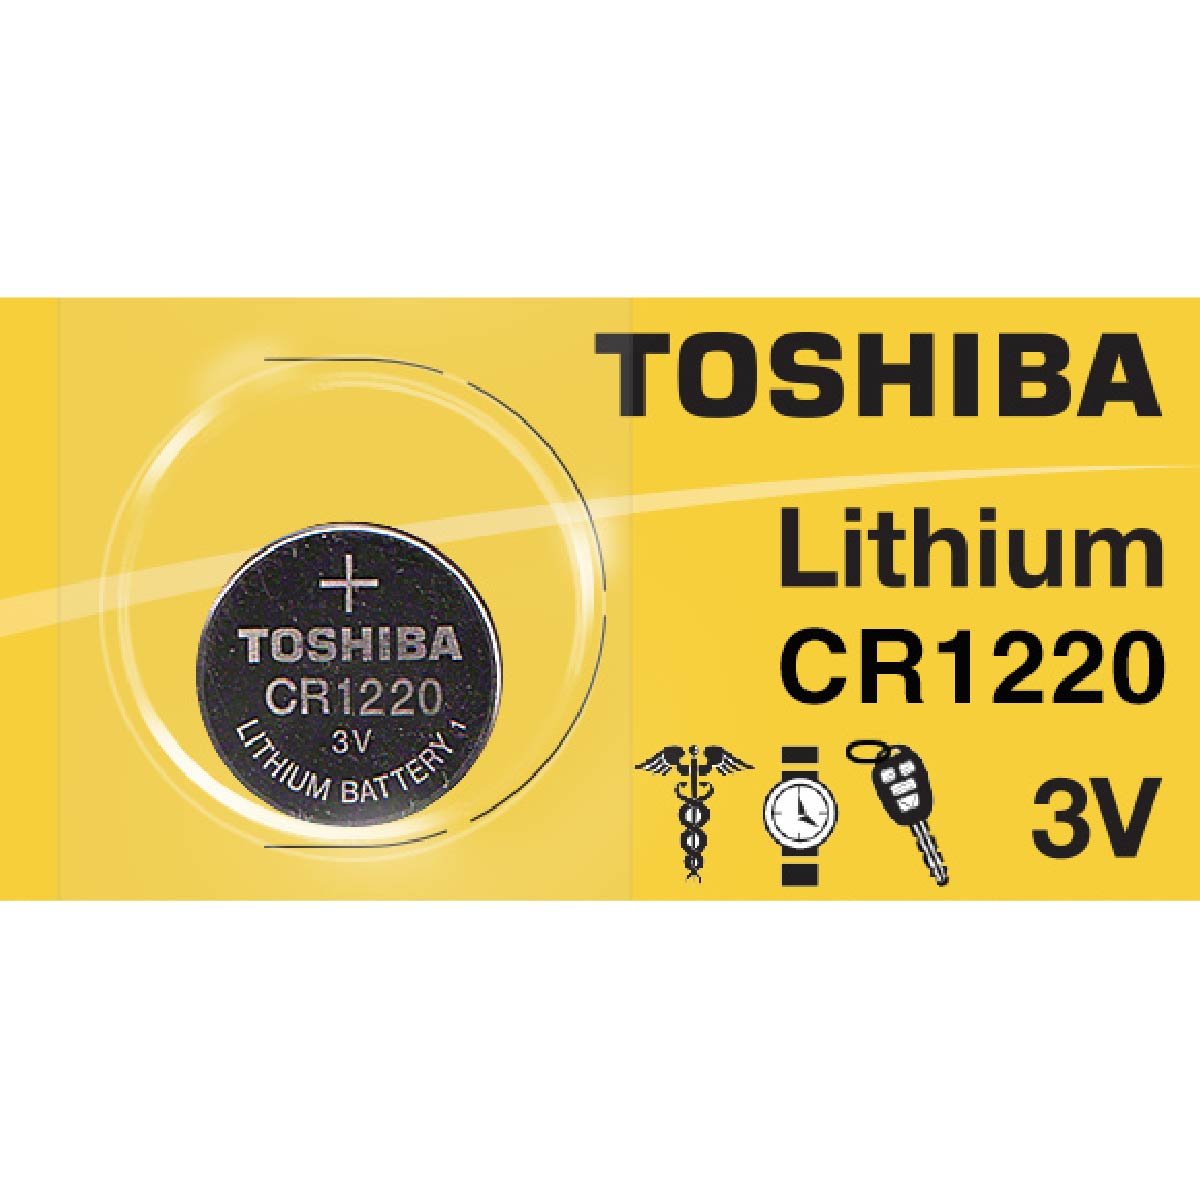 Toshiba CR1220 Lithium Coin Cell Battery 3v, Tear Strip